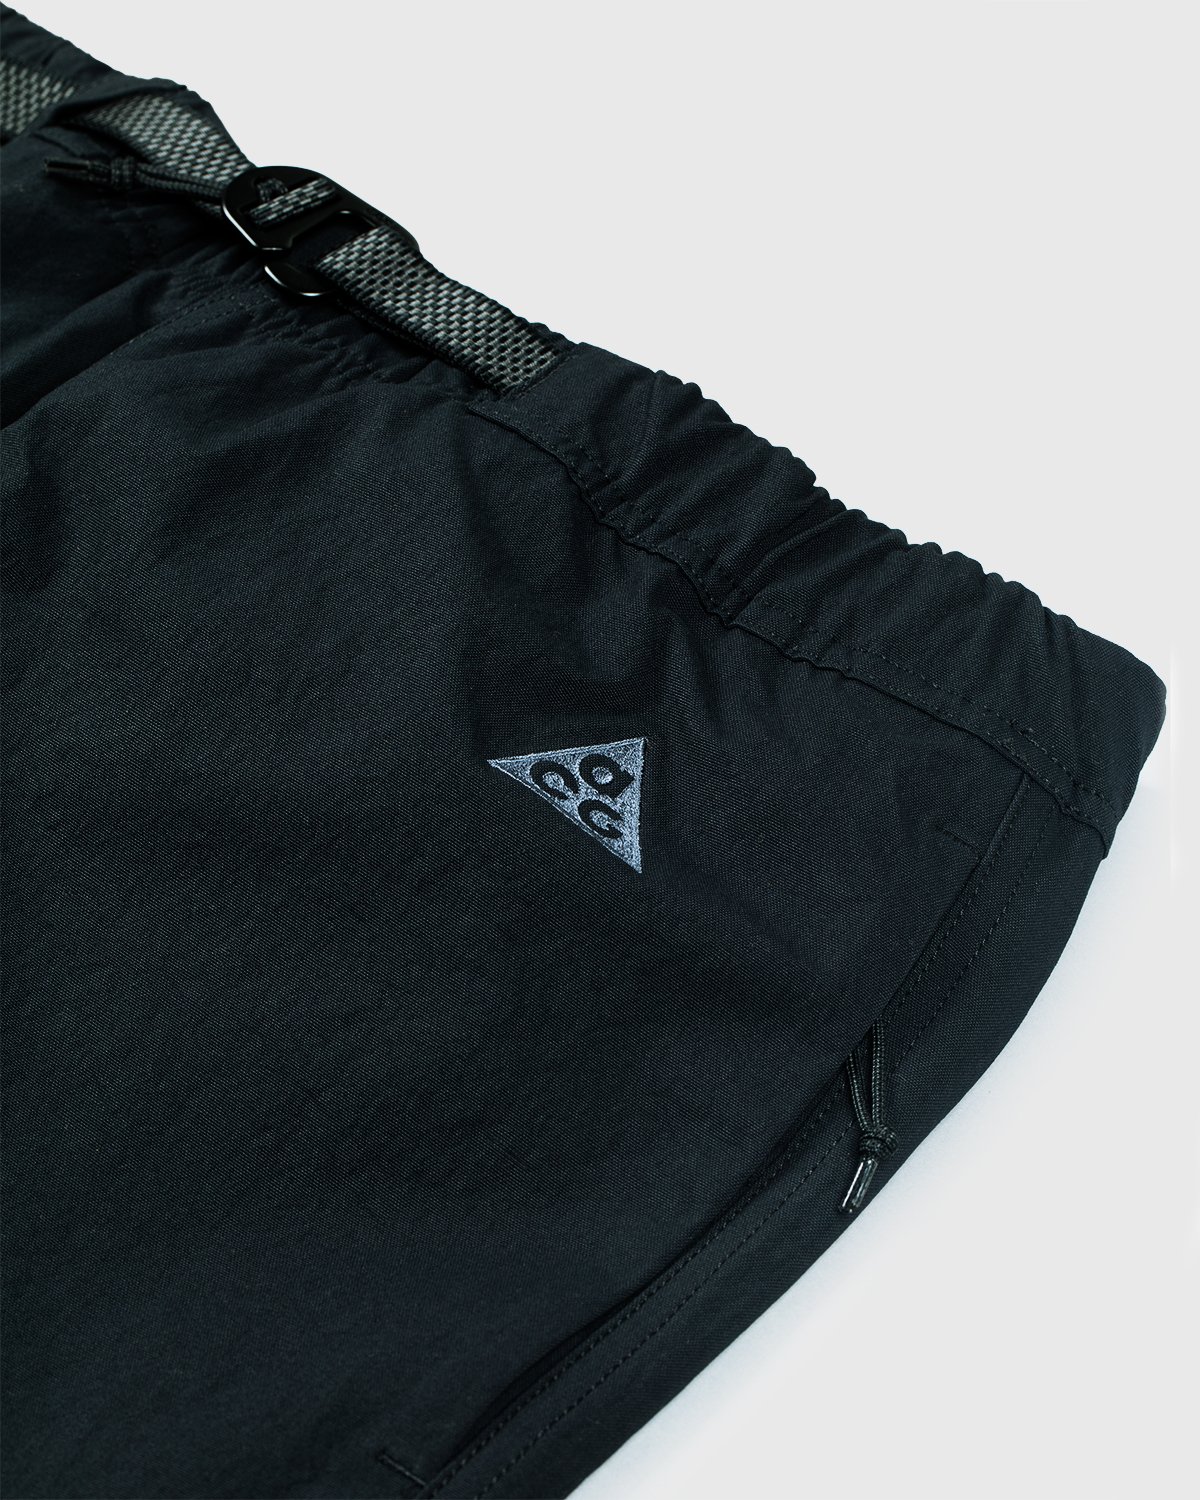 Nike ACG - M NRG ACG Trail Pant Black - Clothing - Black - Image 4